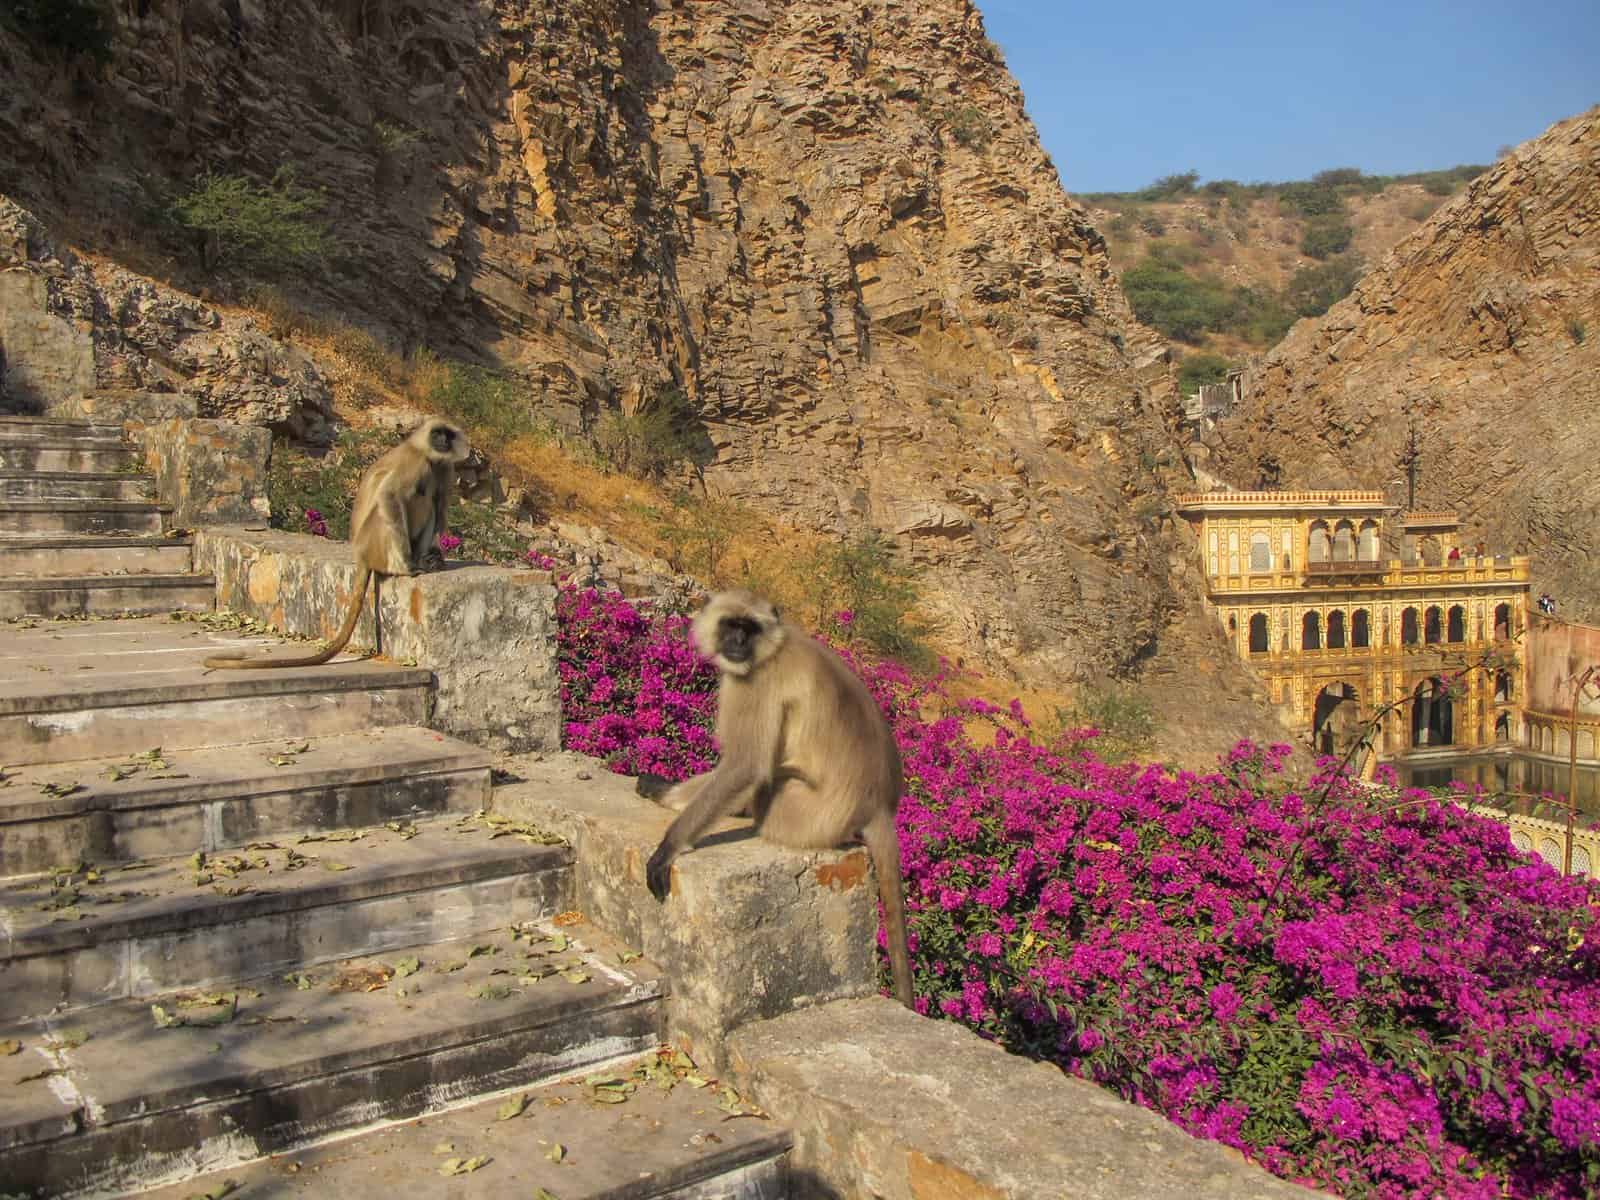 Monkeys sitting on the steps of Monkey Temple in Jaipur